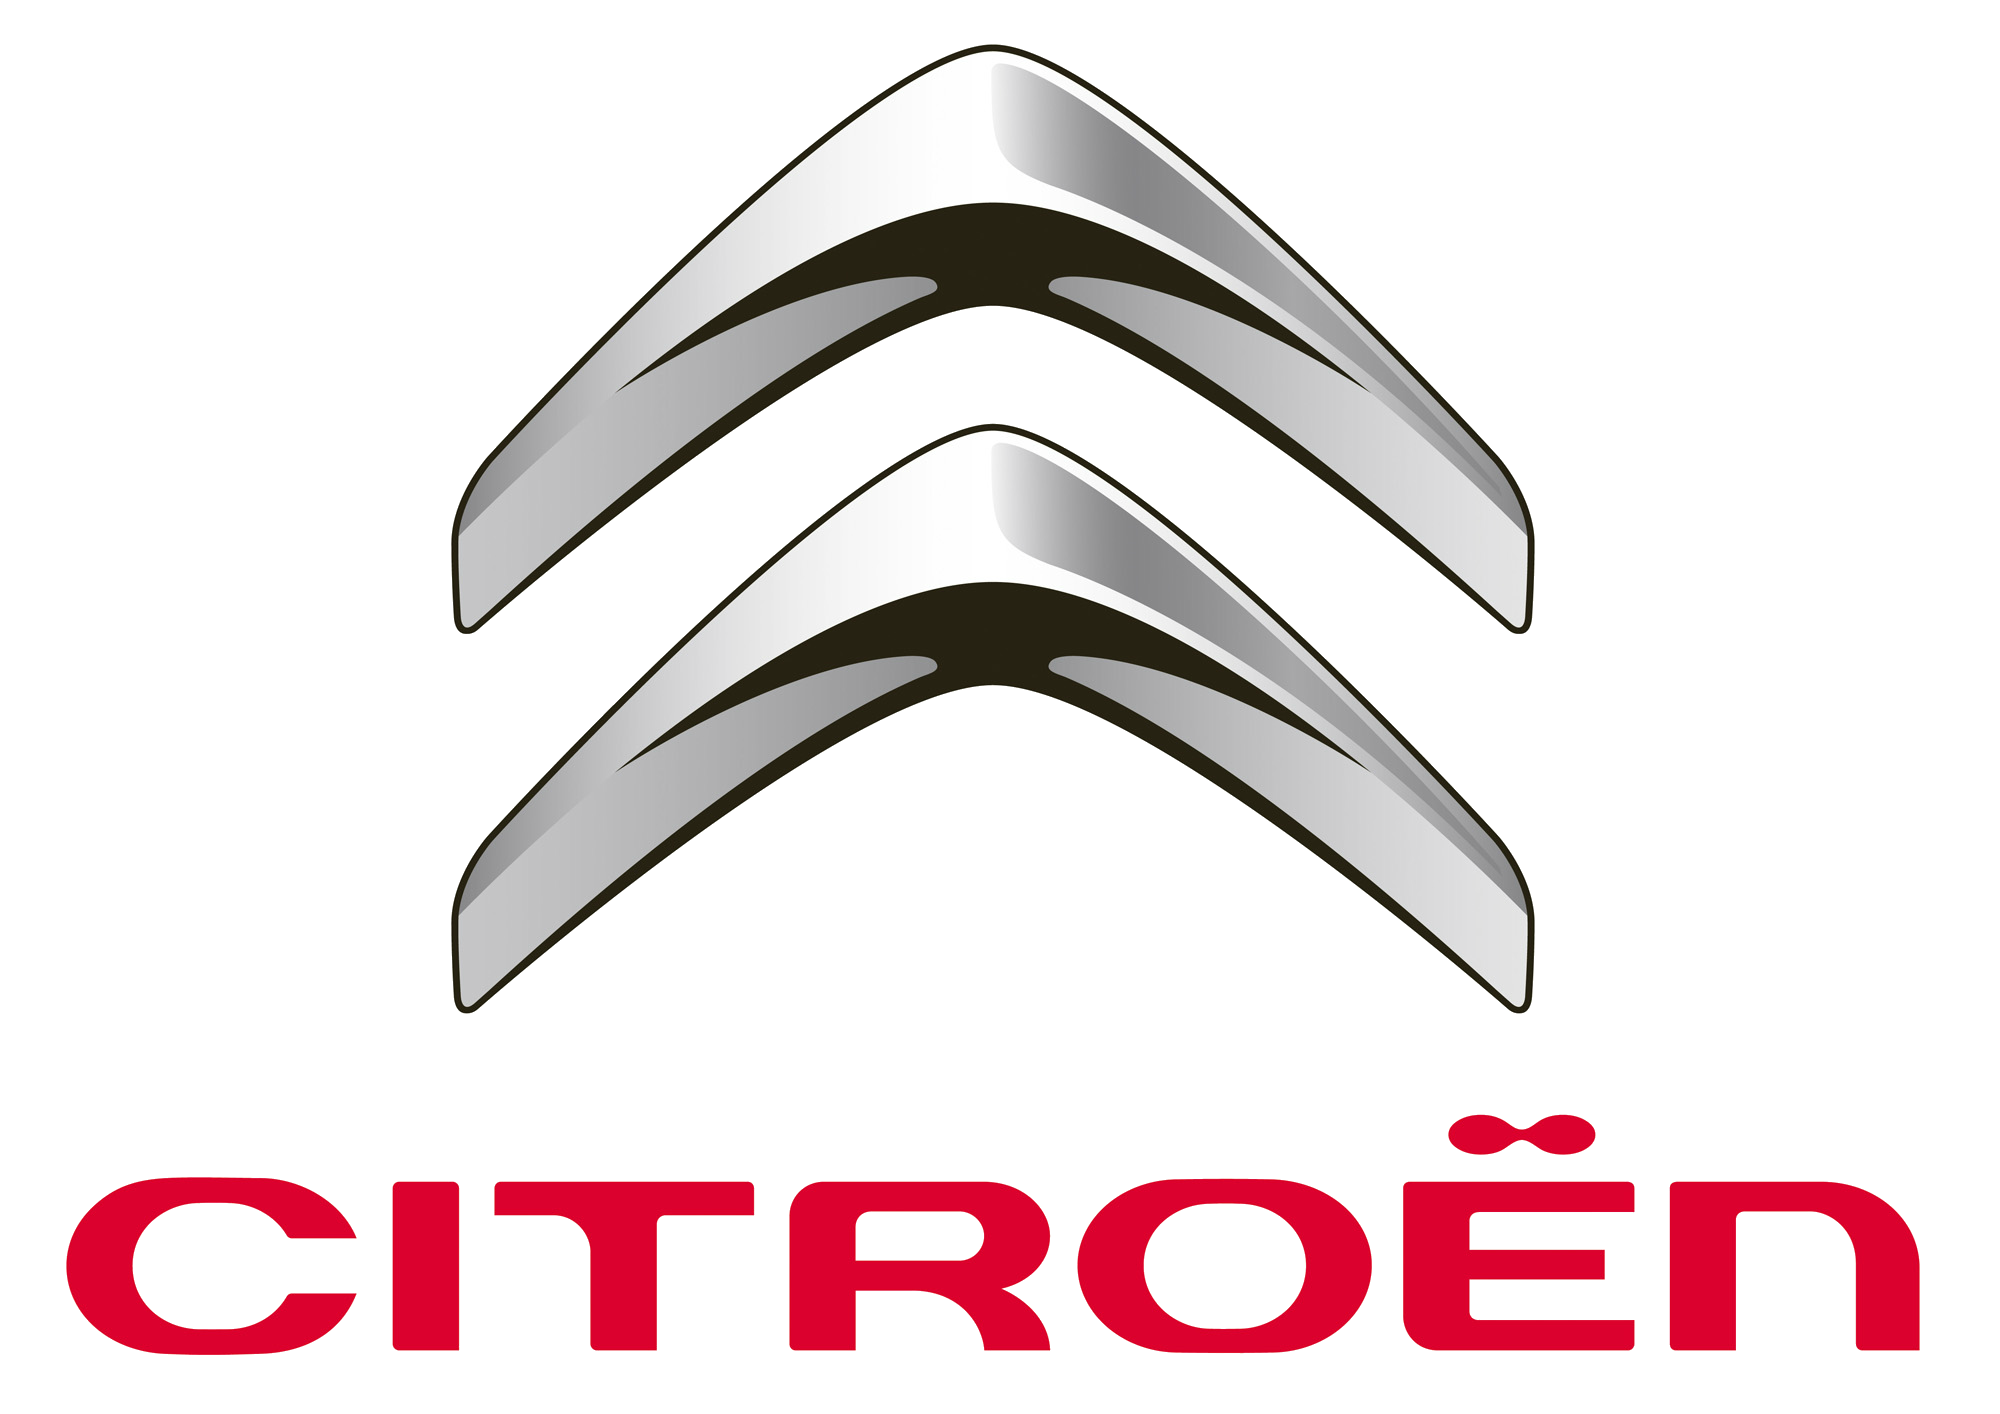 Citroen Logo, Citroen Car Symbol Meaning and History | Car Brand ...